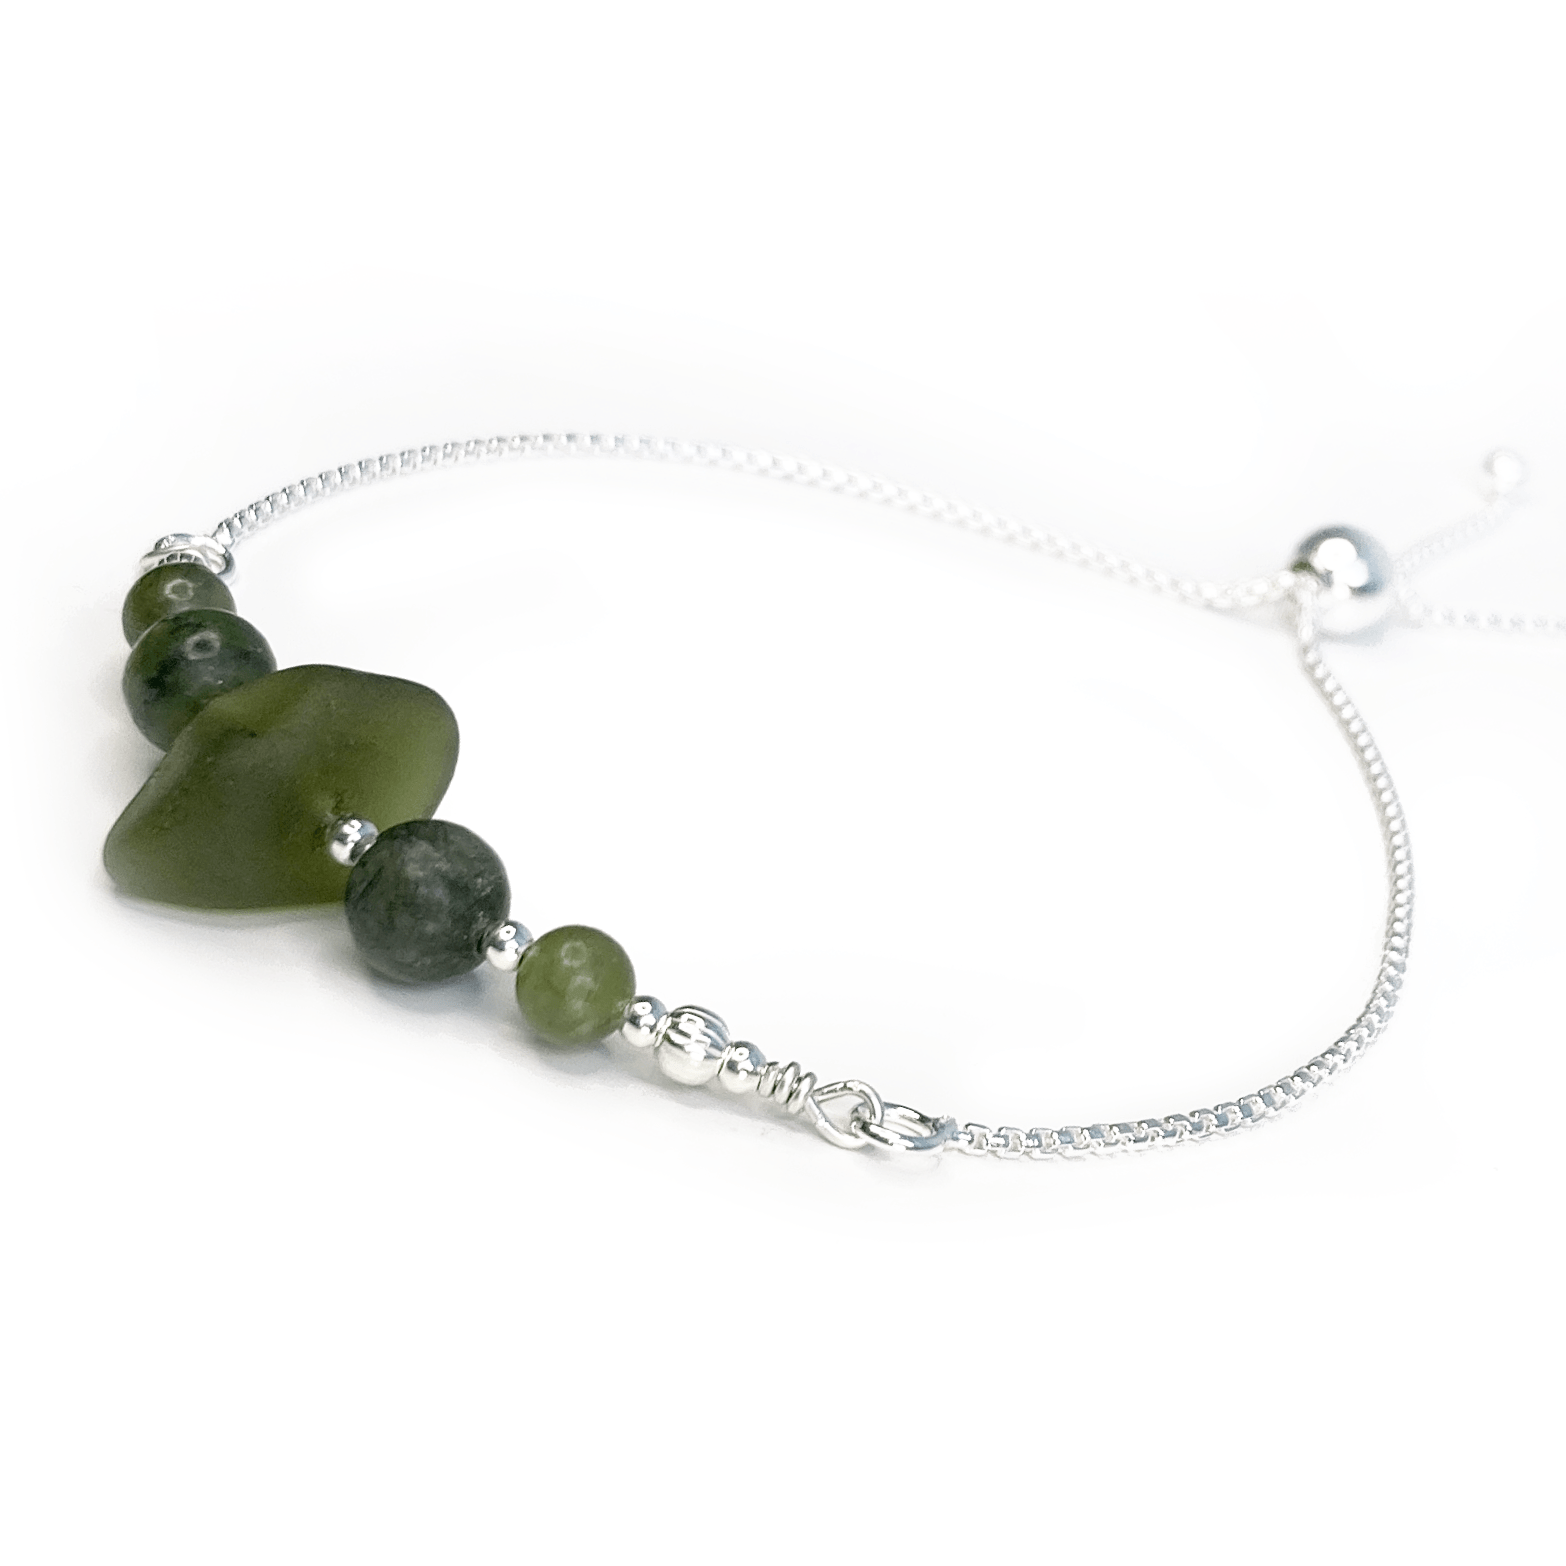 Green Sea Glass Bracelet - Sterling Silver Slider Bracelet with Jade Crystal Beads - East Neuk Beach Crafts